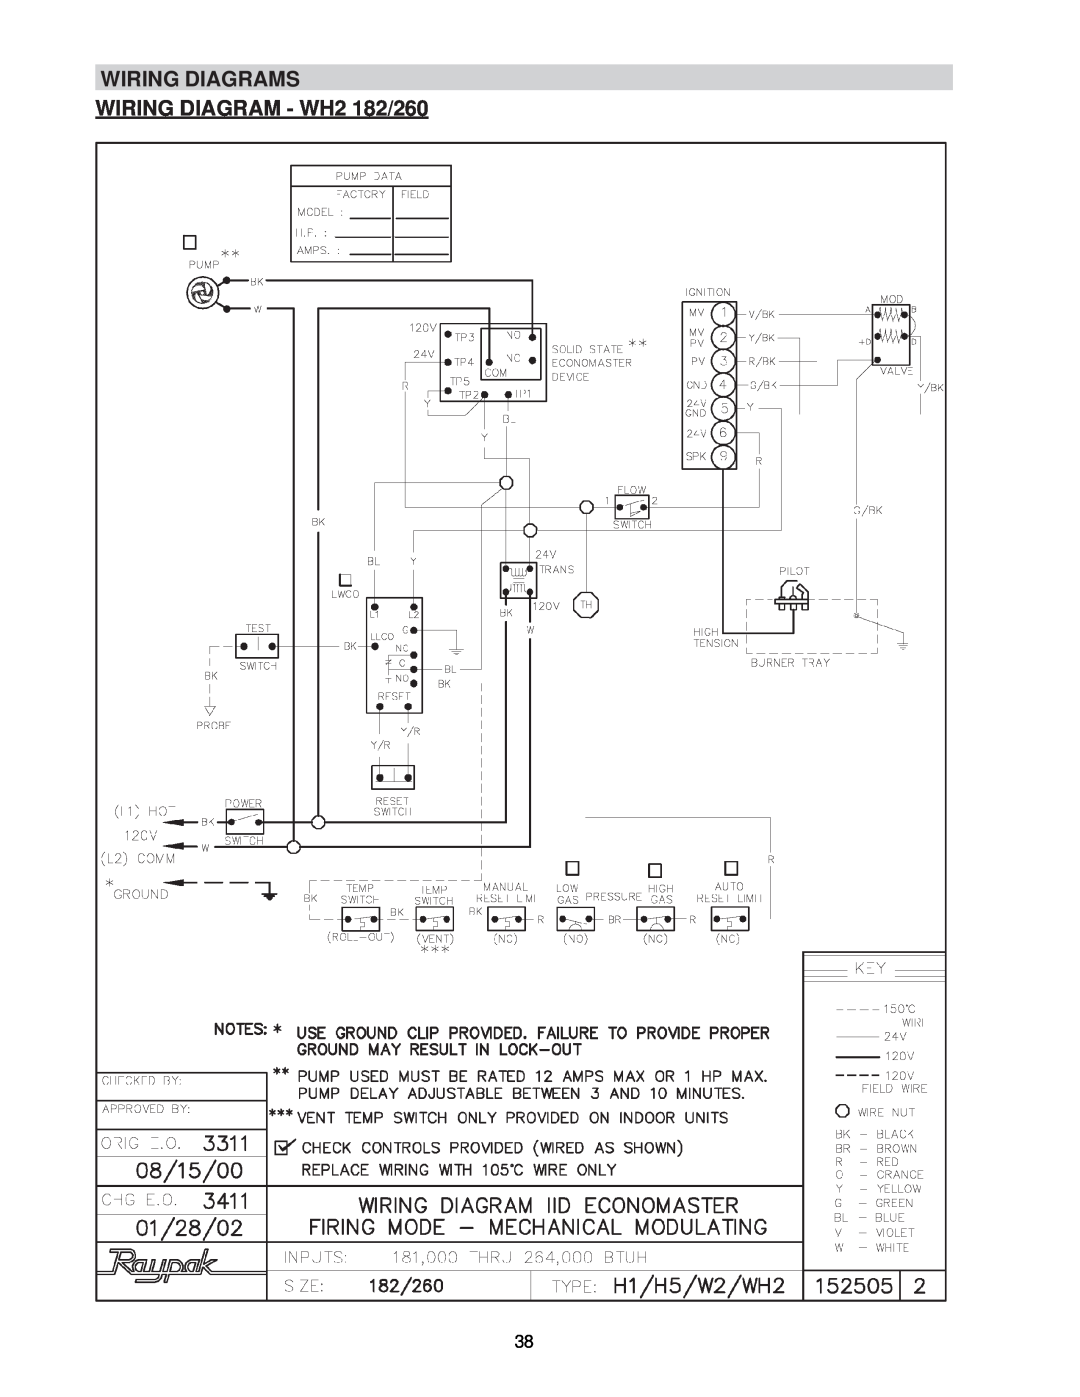 Raypak 0133-4001 manual WIRING DIAGRAMS WIRING DIAGRAM - WH2 182/260 